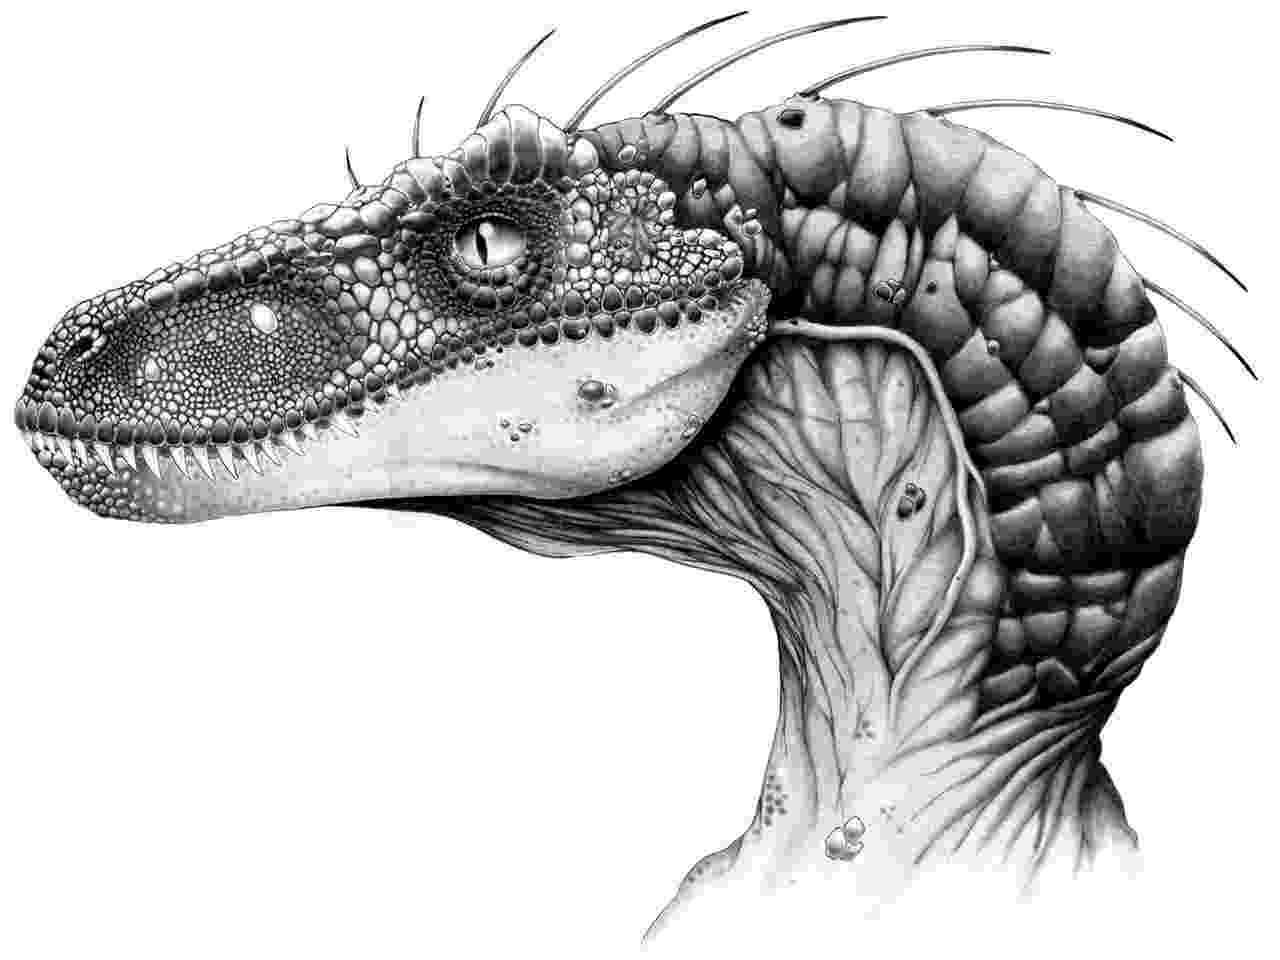 velociraptor pictures velociraptor coloring pages coloring pages to download pictures velociraptor 1 1